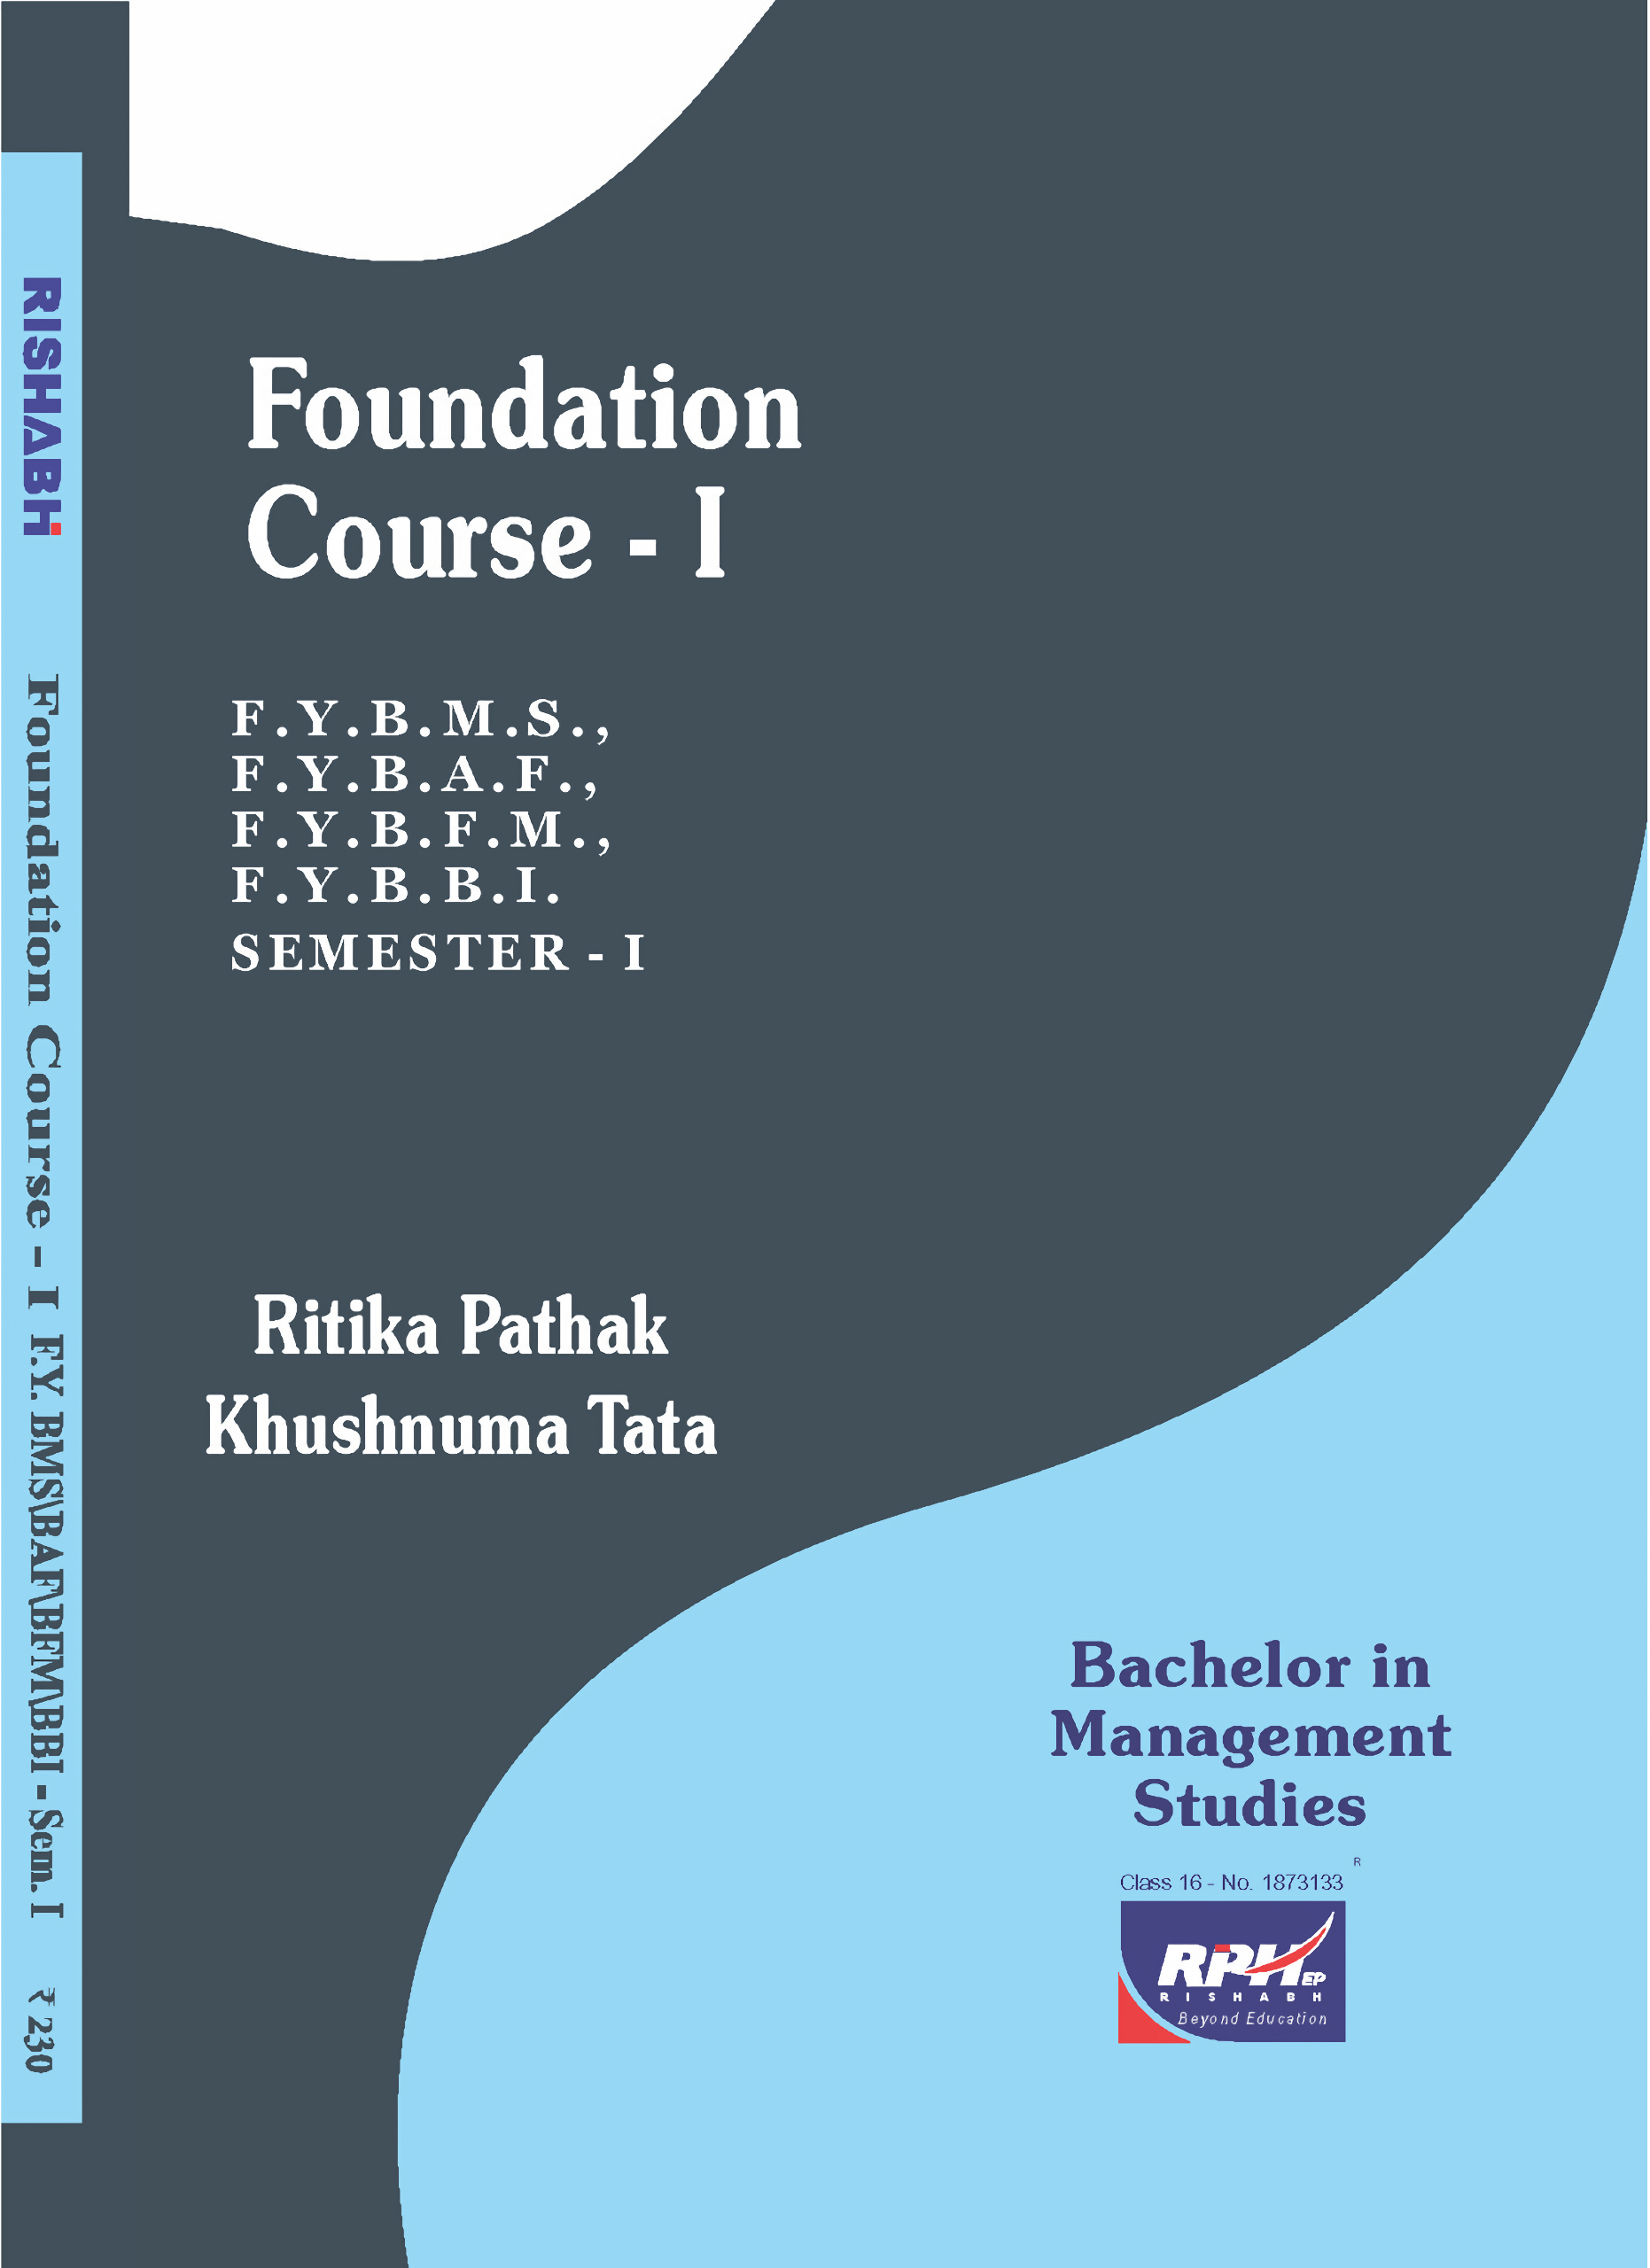 Foundation Course – I-new